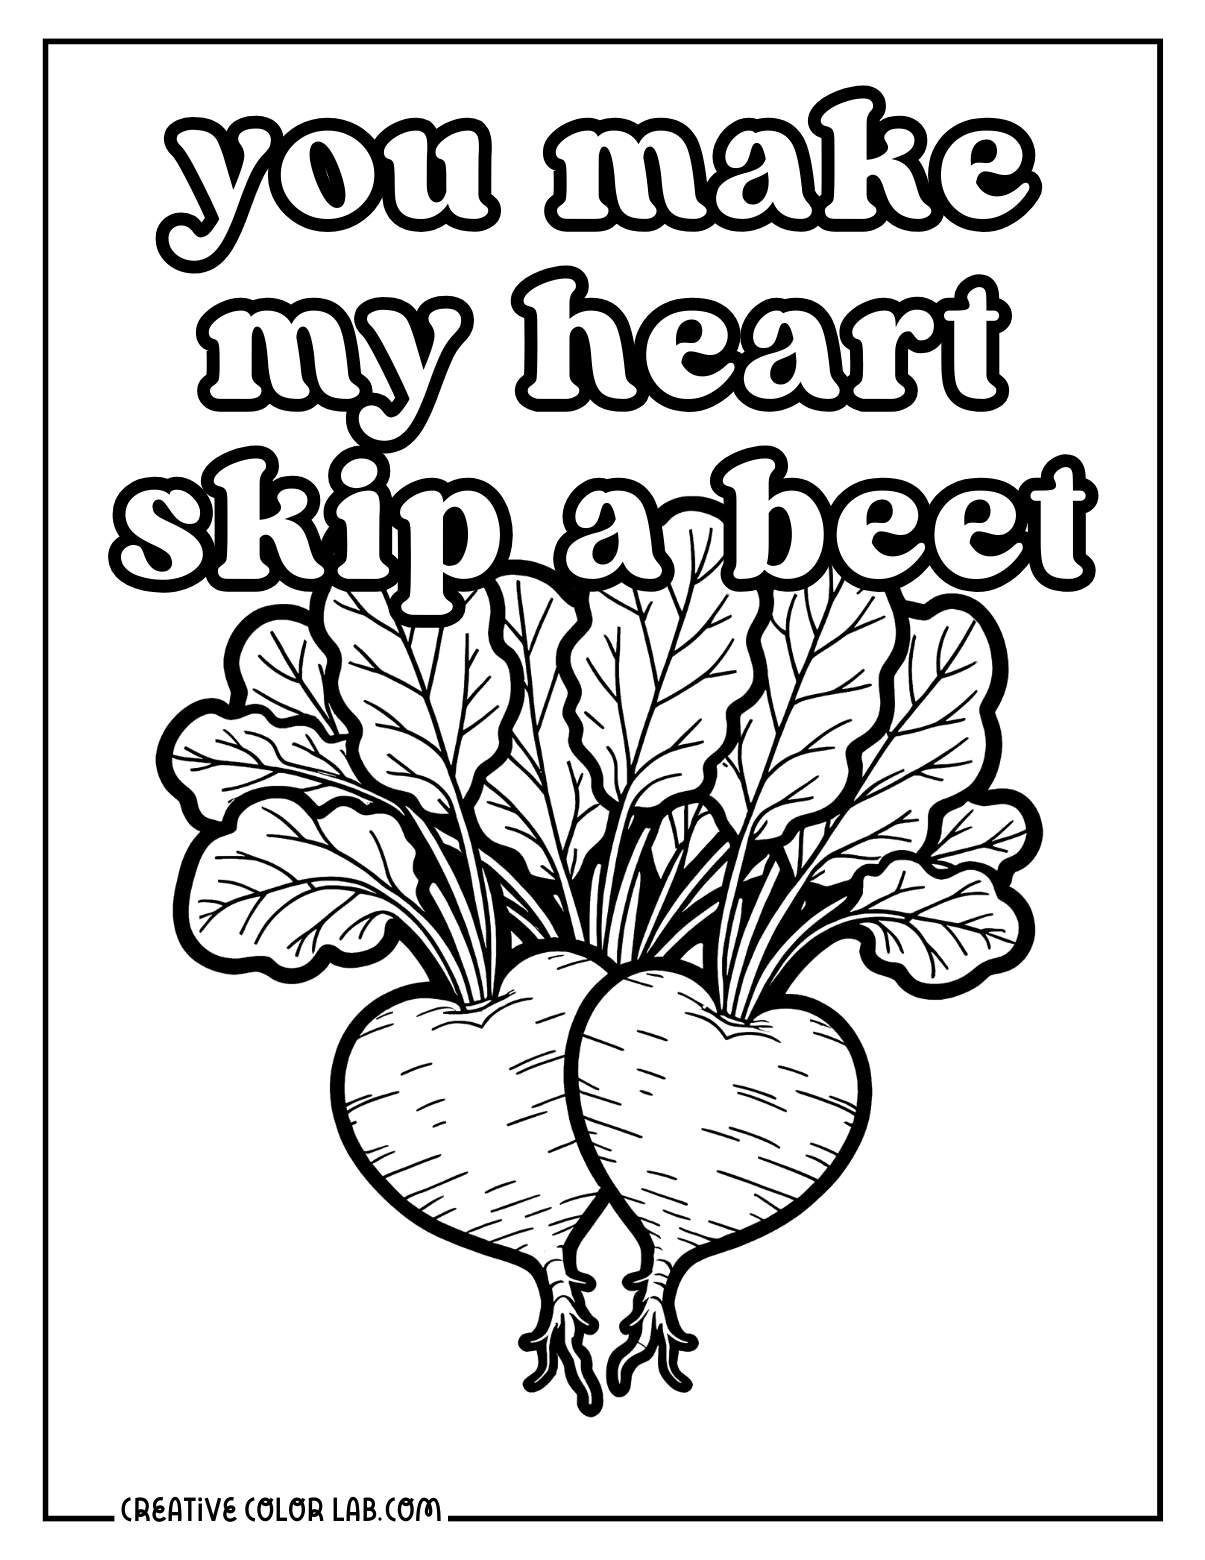 Heart skip a beet funny coloring sheet.